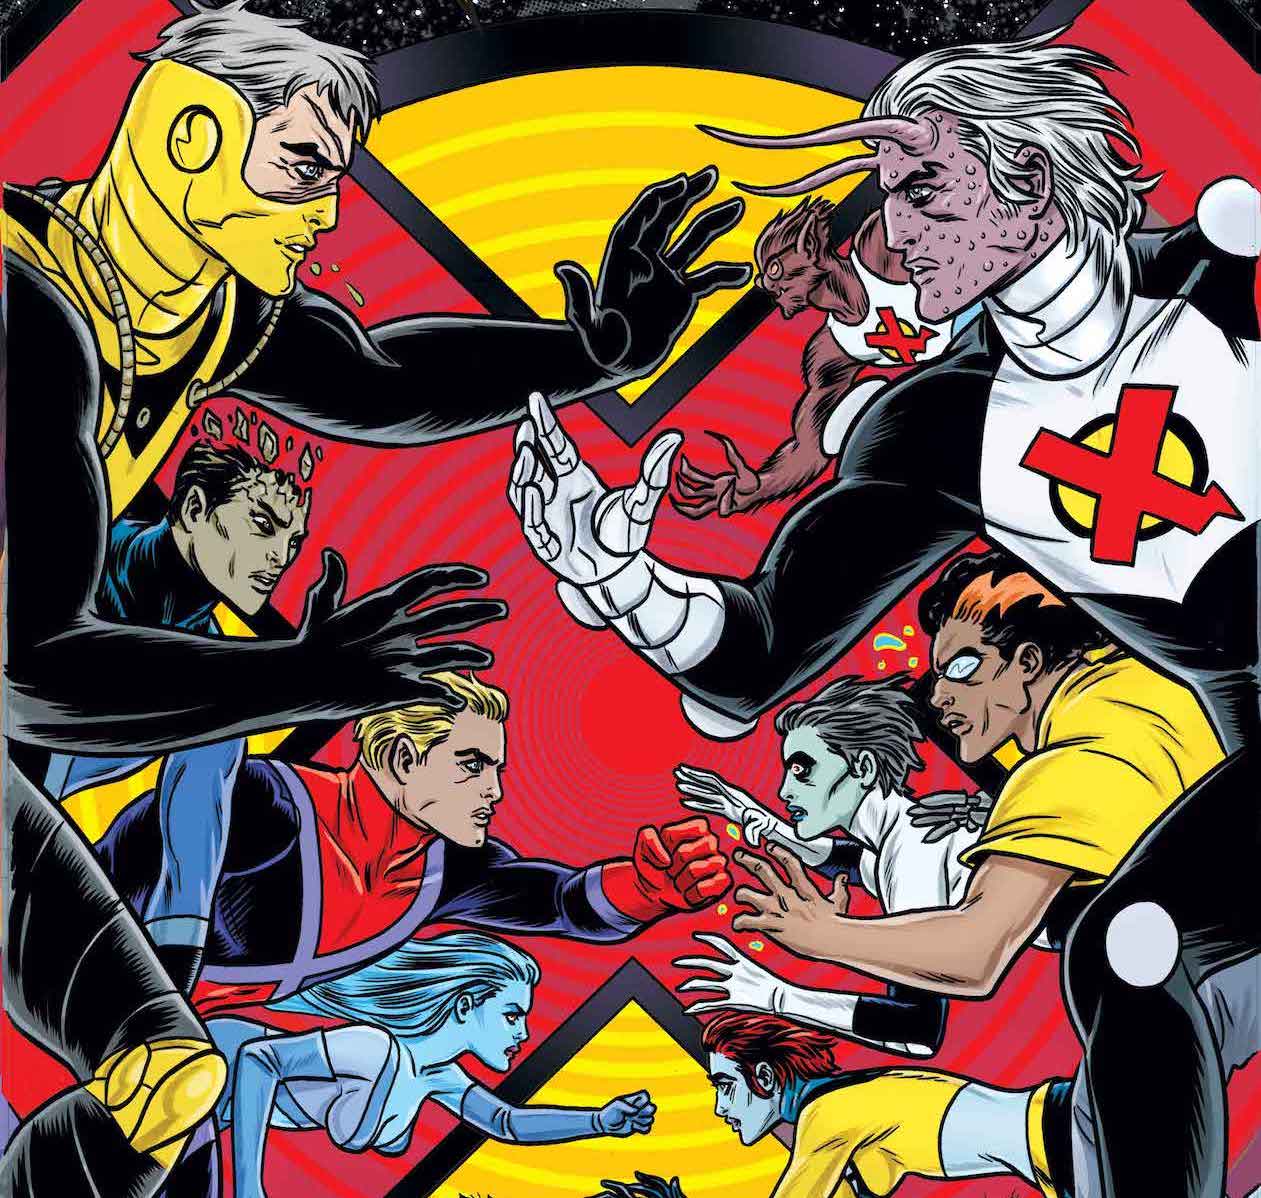 New X-Men series 'X-Cellent' coming February 2022